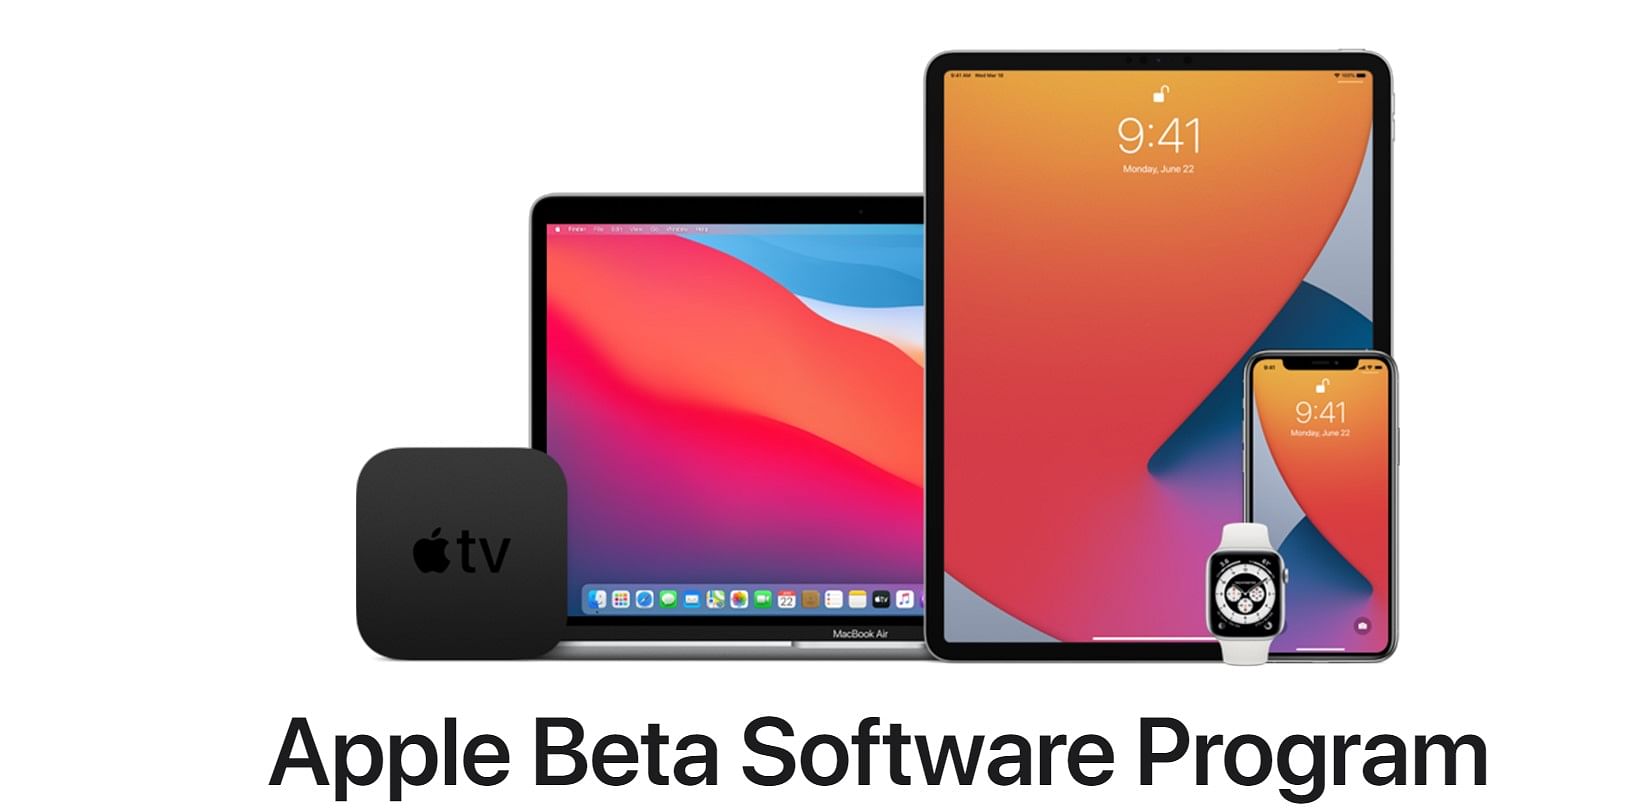 Apple Beta Software Program website (screen-grab)